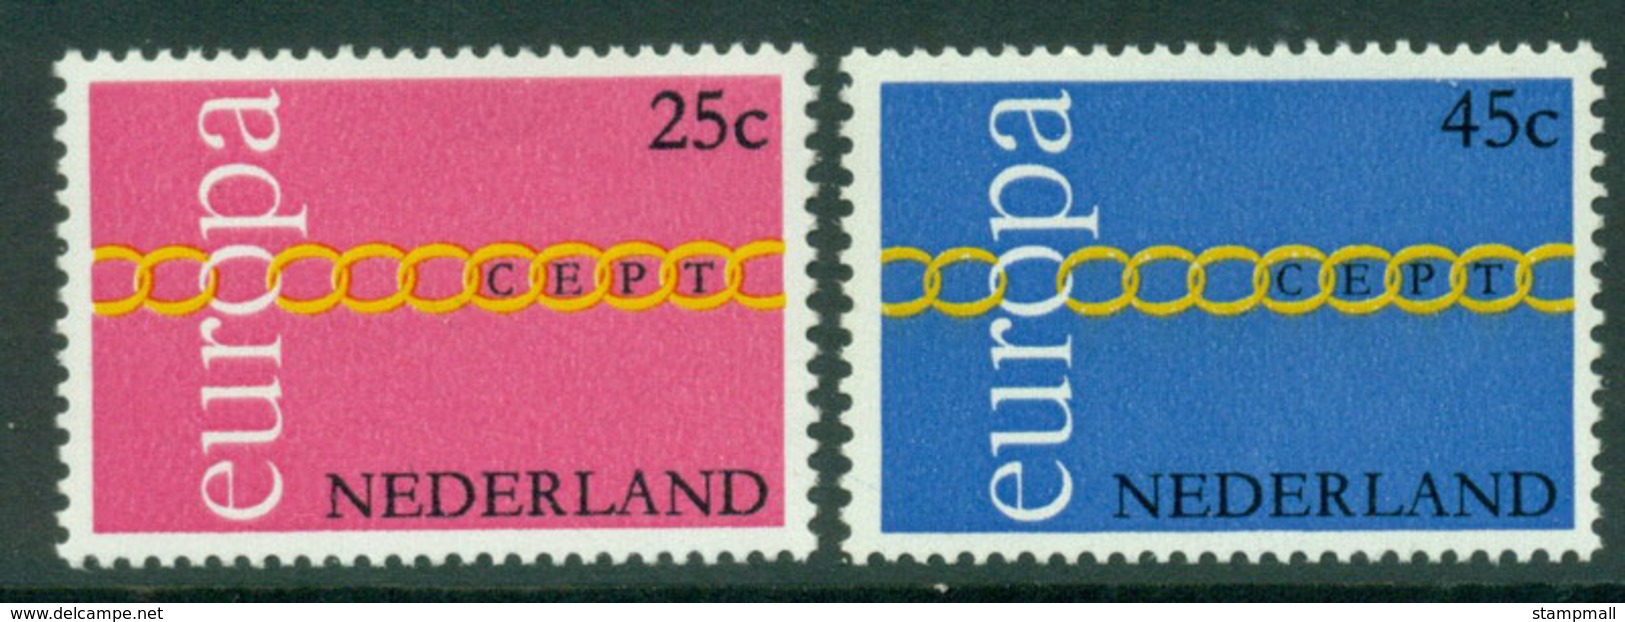 Netherlands 1971 Europa MUH Lot15582 - Unclassified